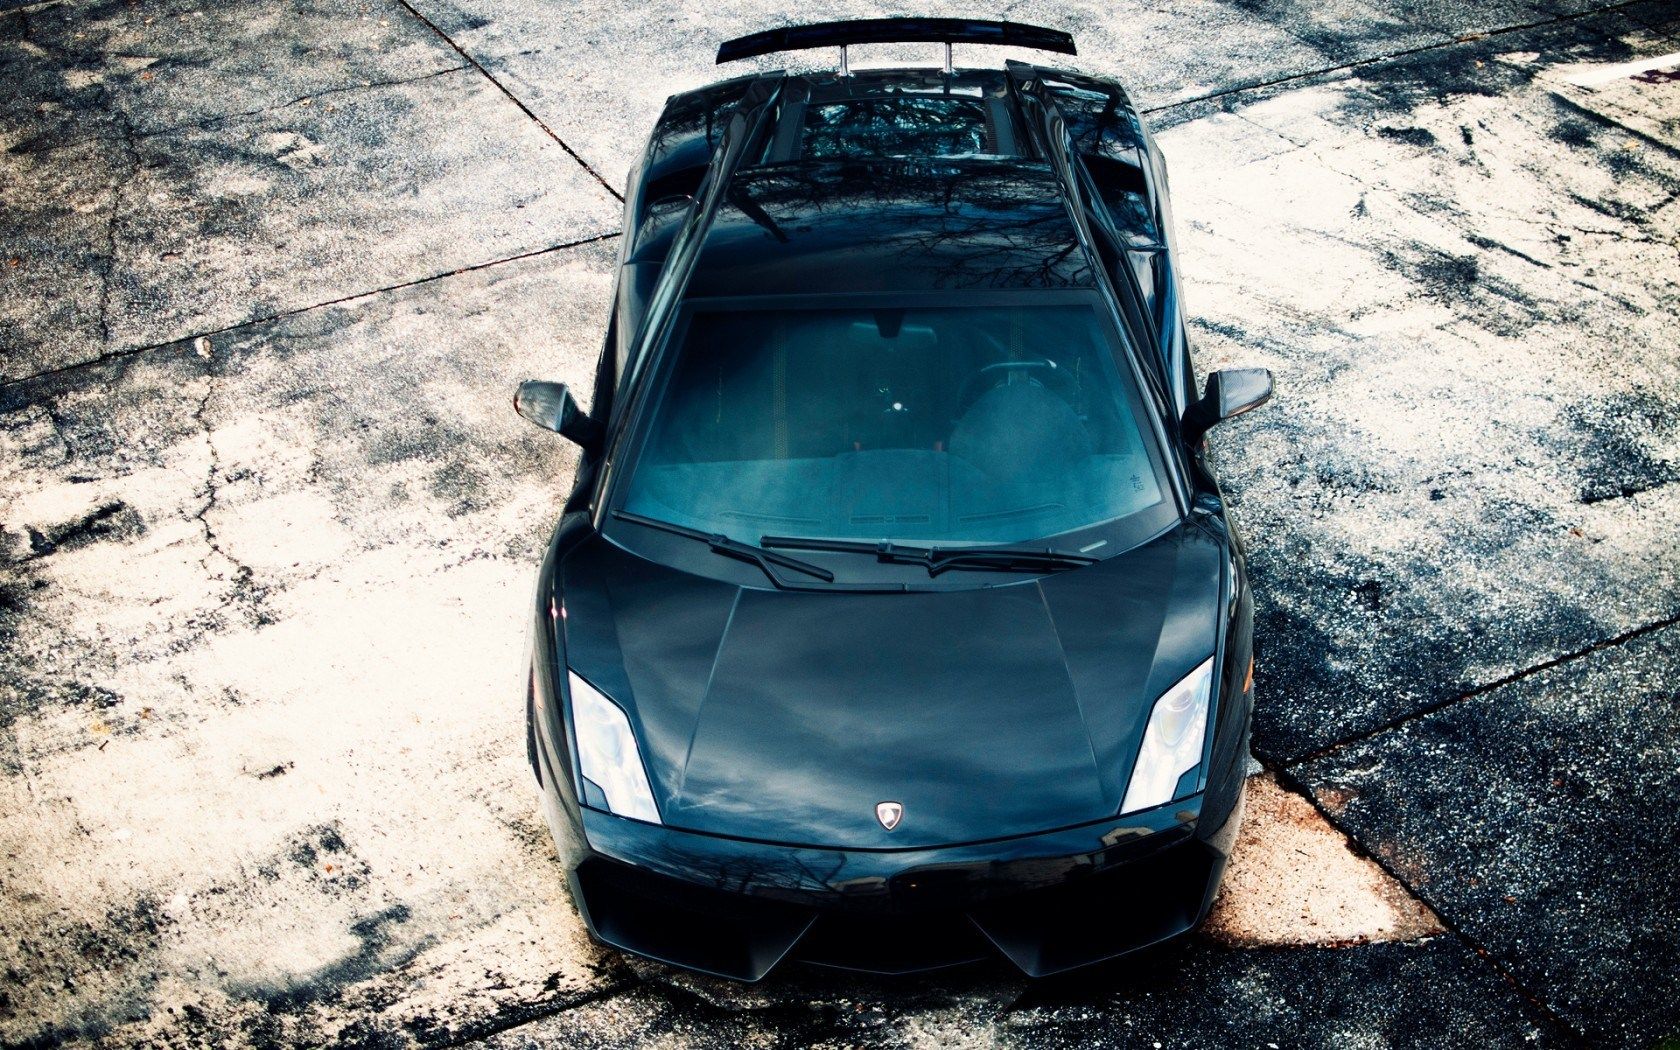 HD wallpaper, 4, Lp570, Lamborghini, Gallardo, Black, Front